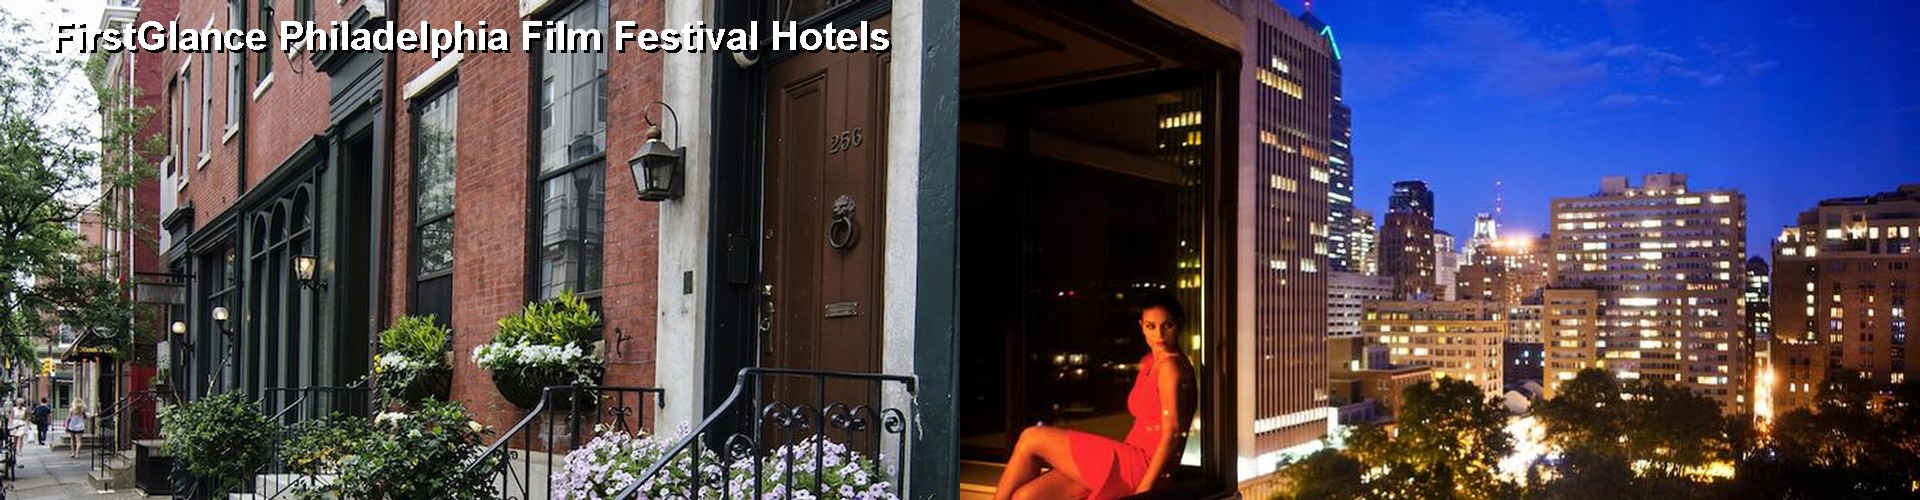 5 Best Hotels near FirstGlance Philadelphia Film Festival